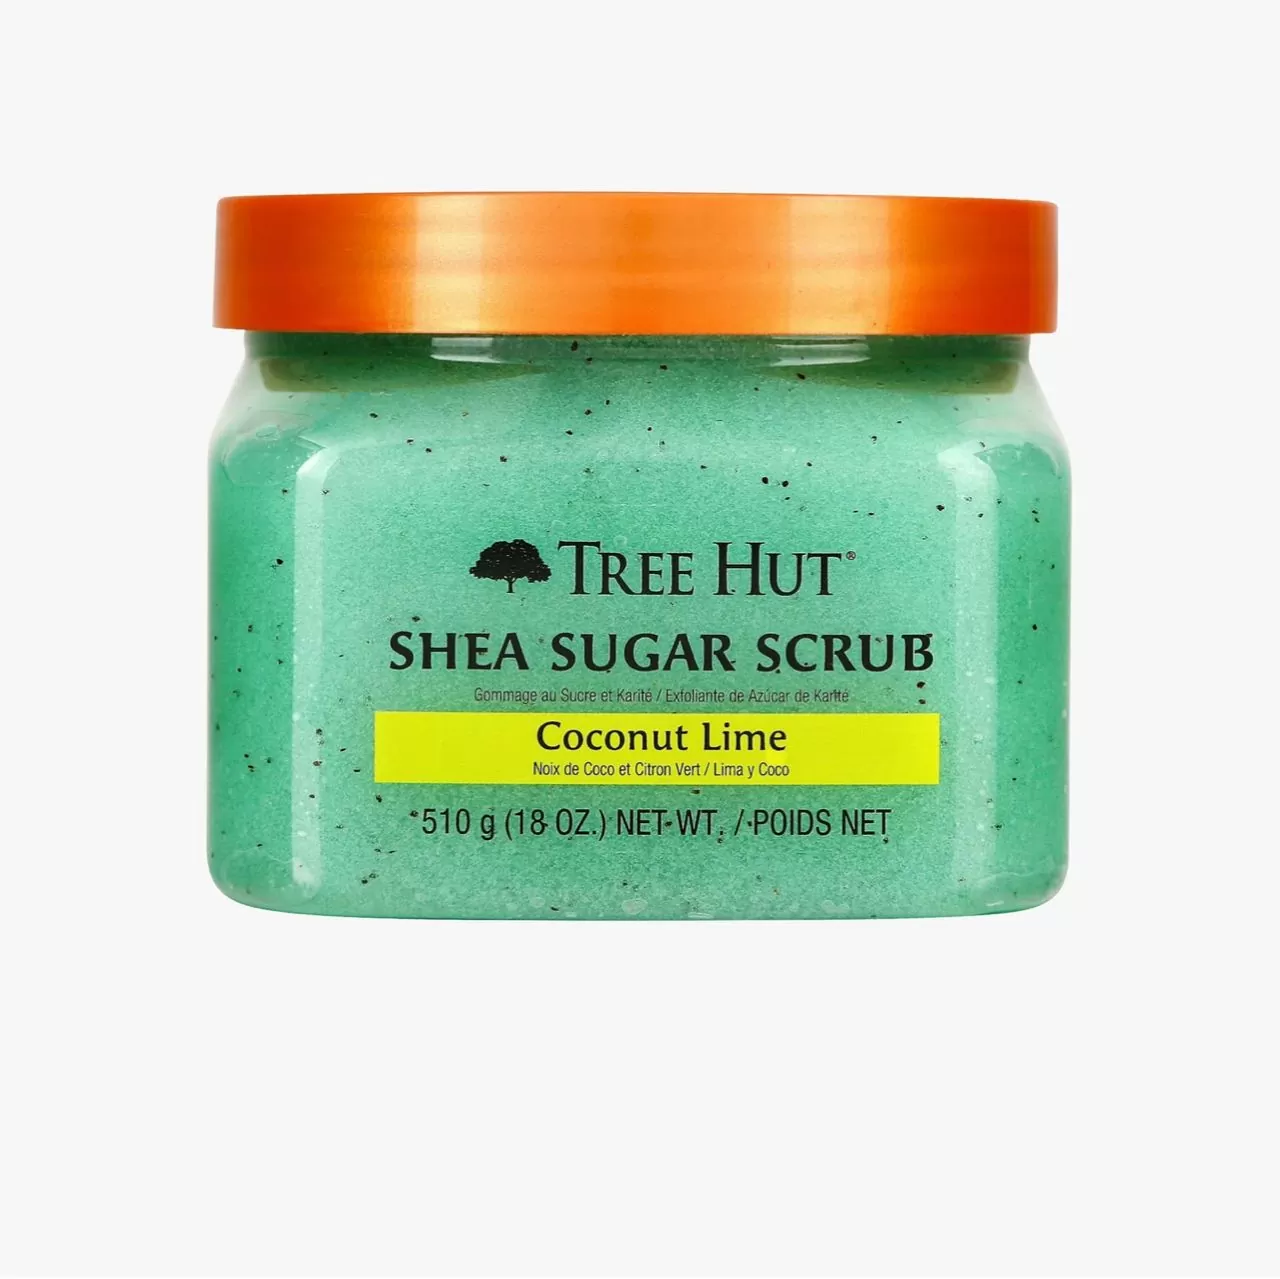 Image showing Tree Hut Shea Sugar Body Scrub product exfoliate